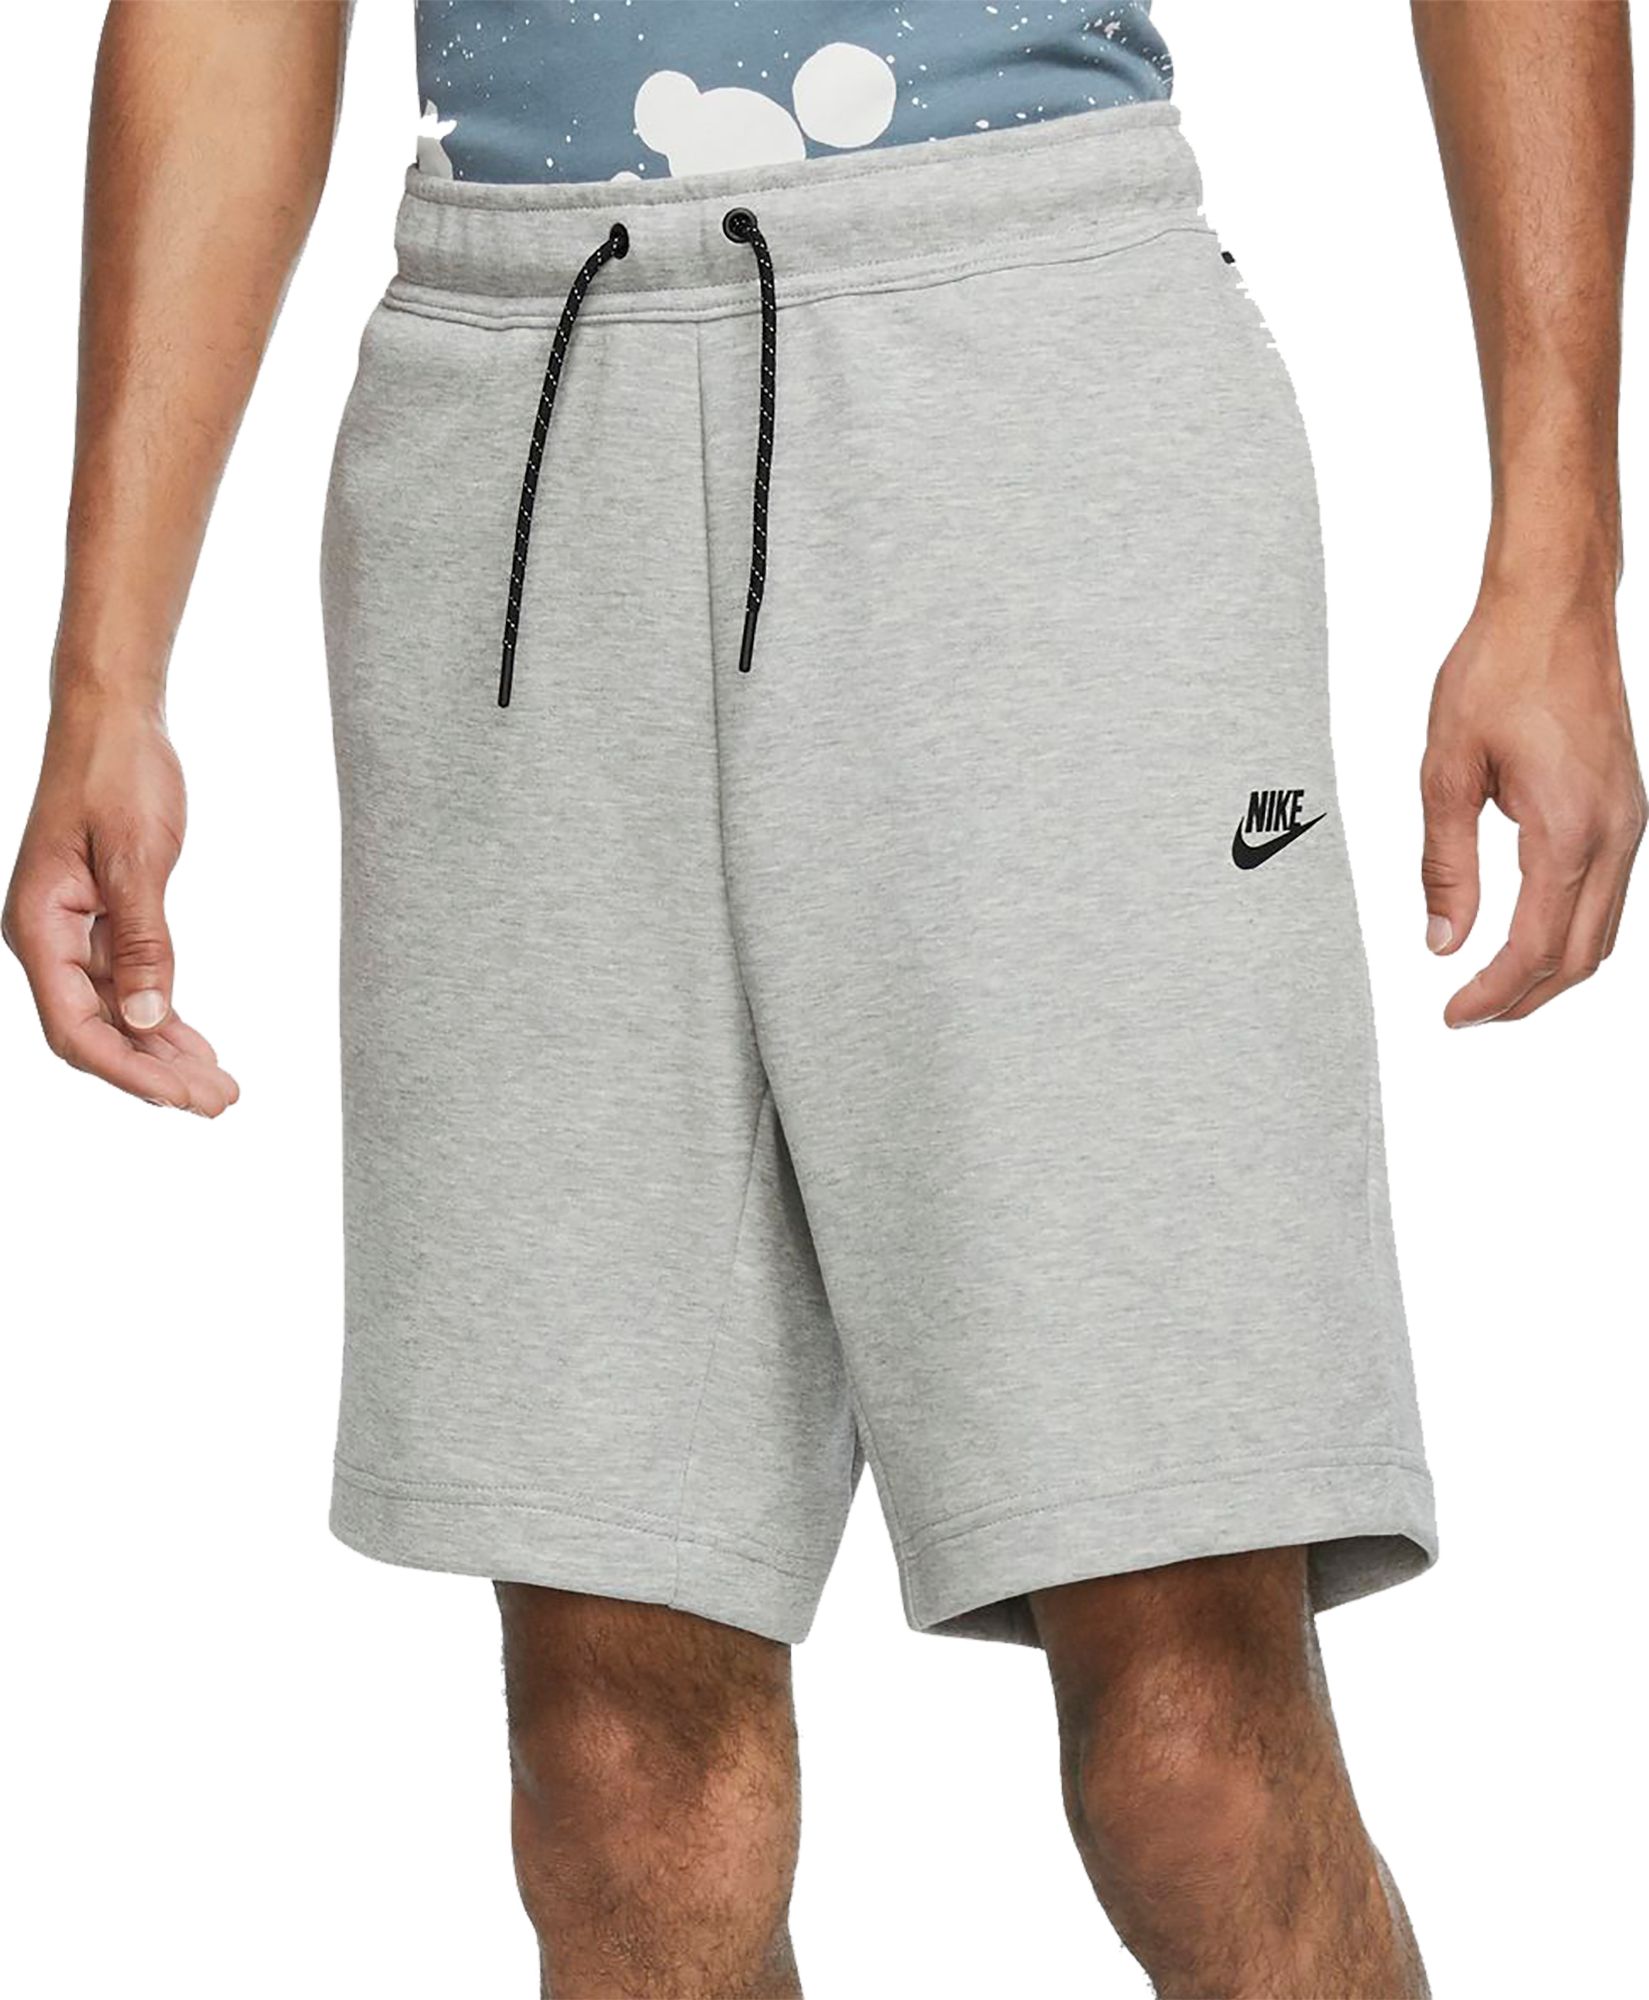 nike gray shorts men